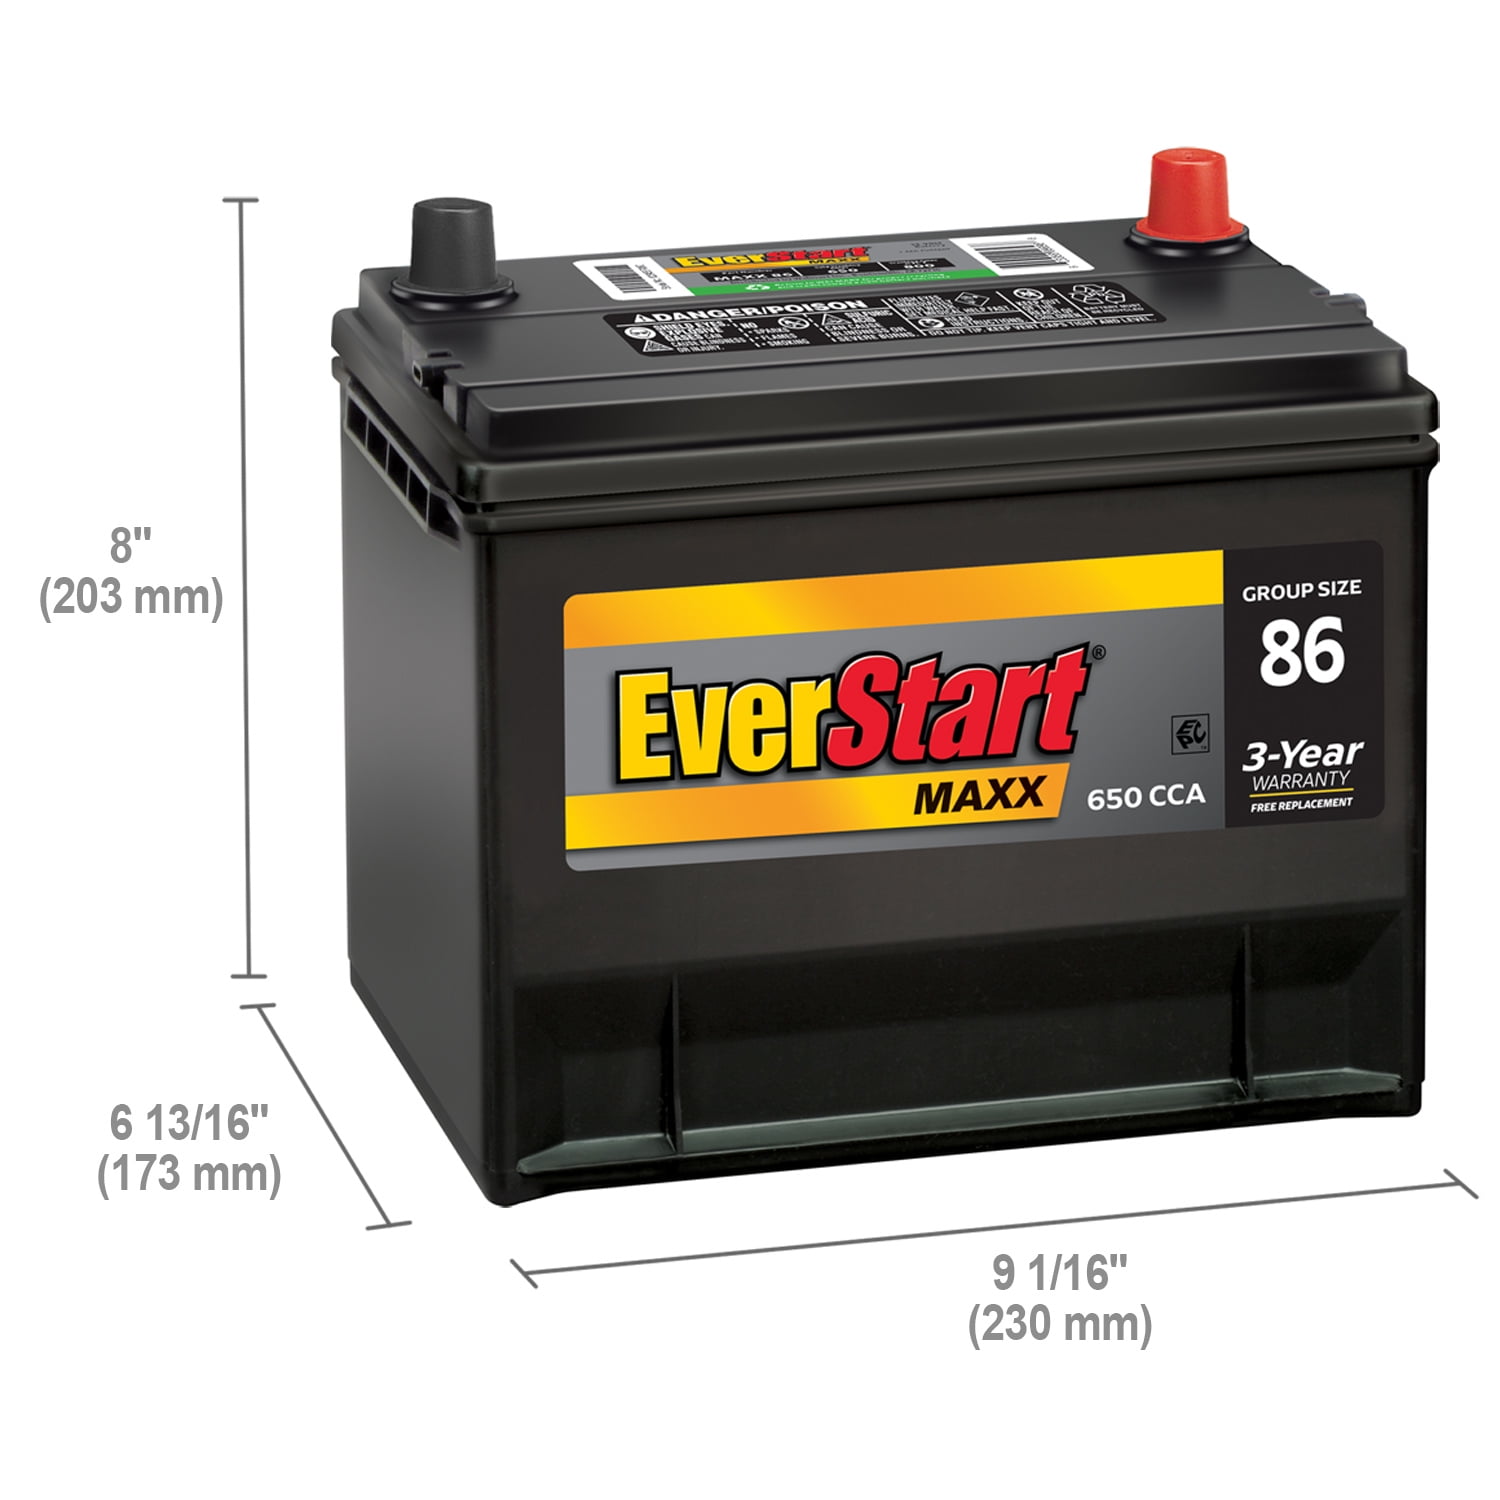 EverStart Maxx Lead Acid Automotive Battery, Group Size 86 12 Volt, 630 CCA